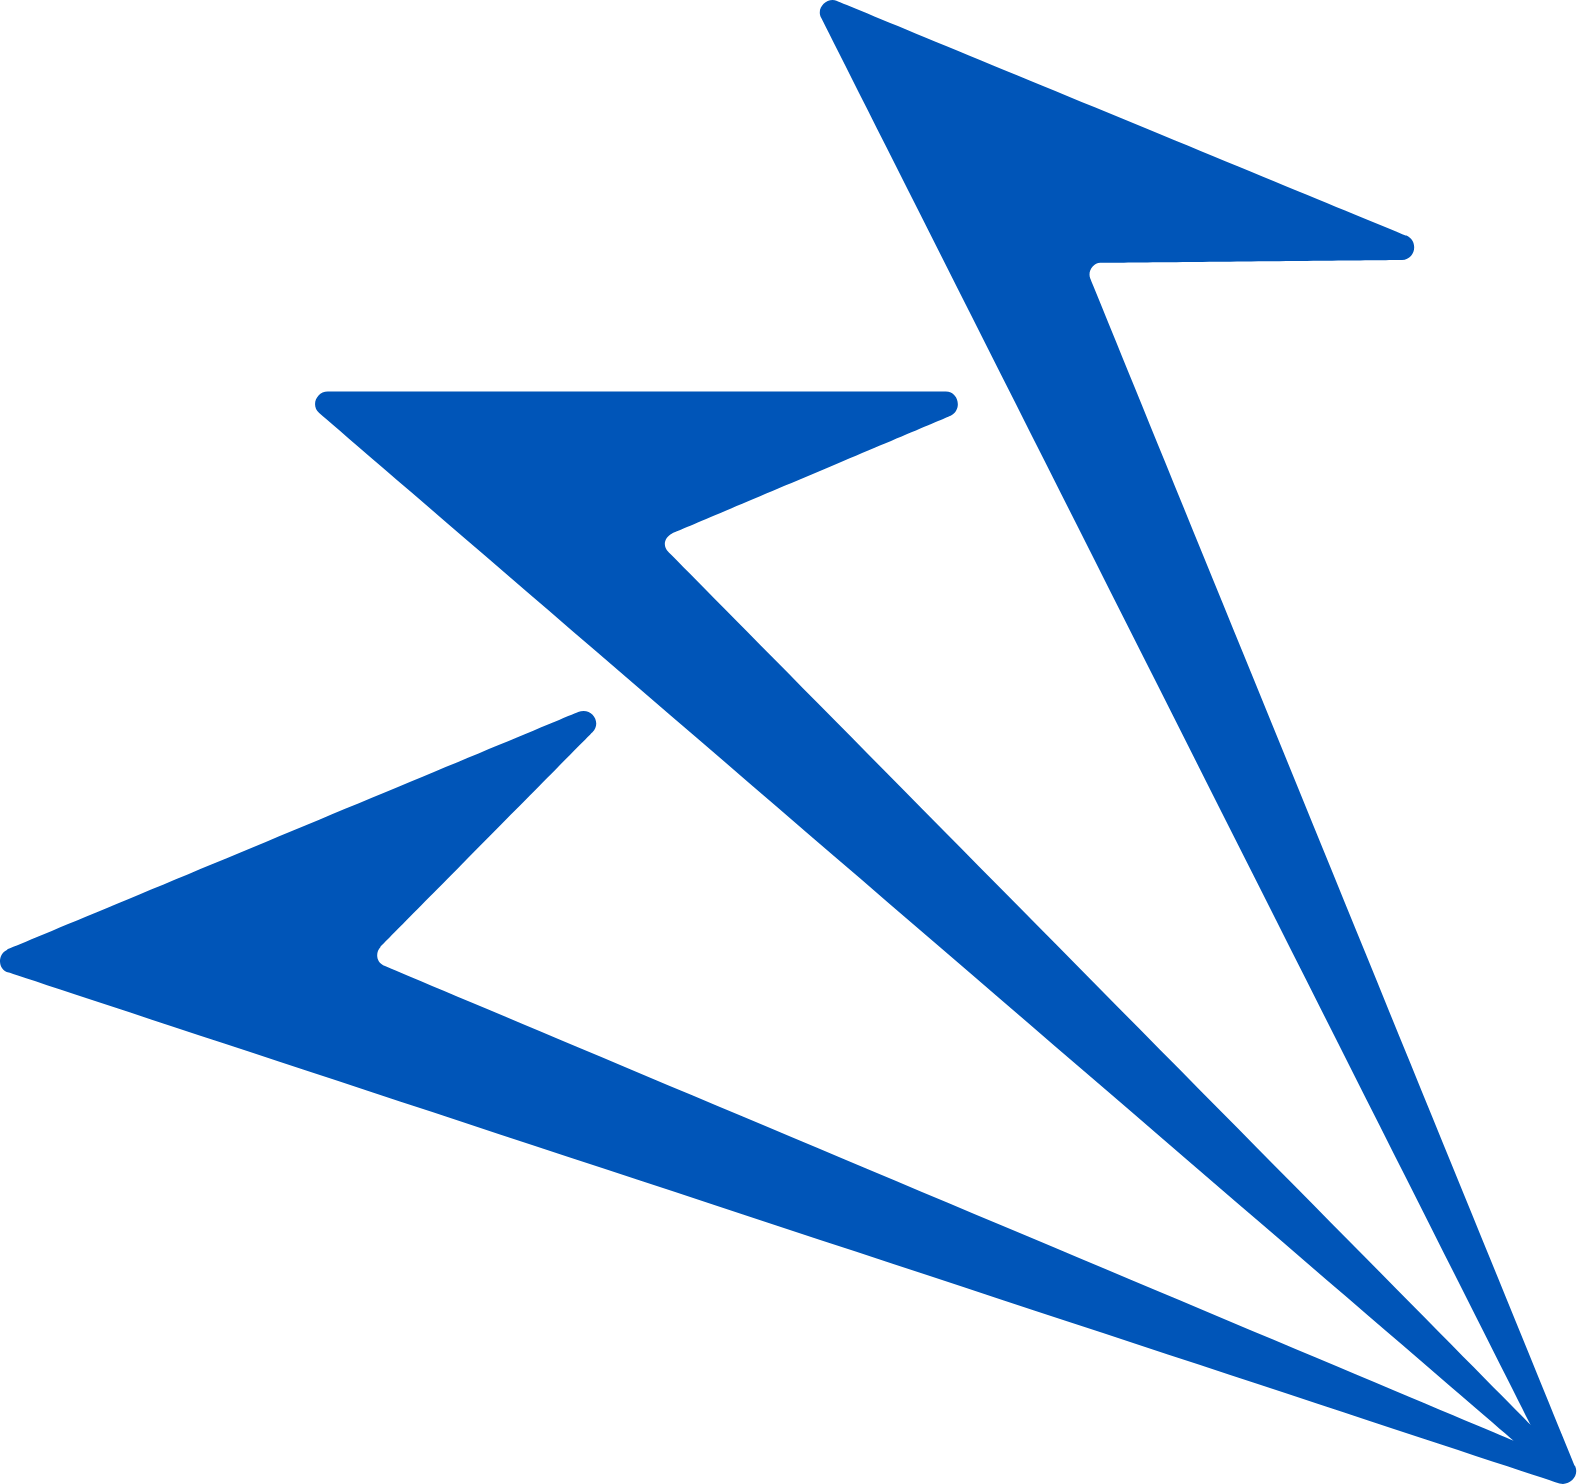 Willis Lease Finance Corporation logo (transparent PNG)